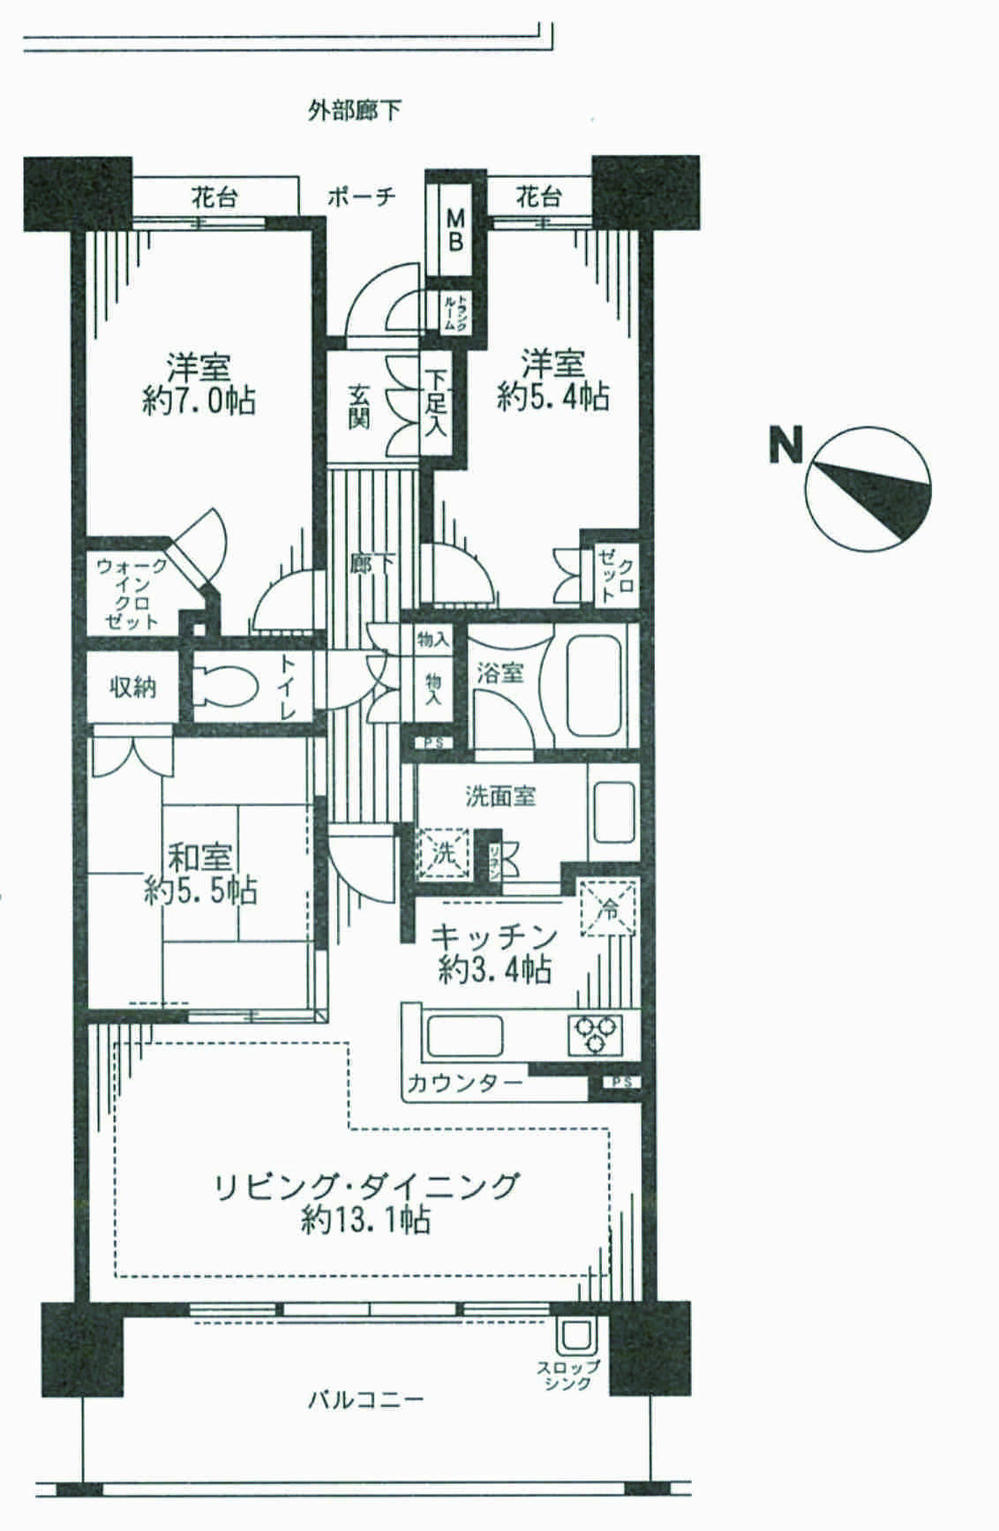 Floor plan. 3LDK, Price 26,300,000 yen, Occupied area 76.22 sq m , Balcony area 12.8 sq m